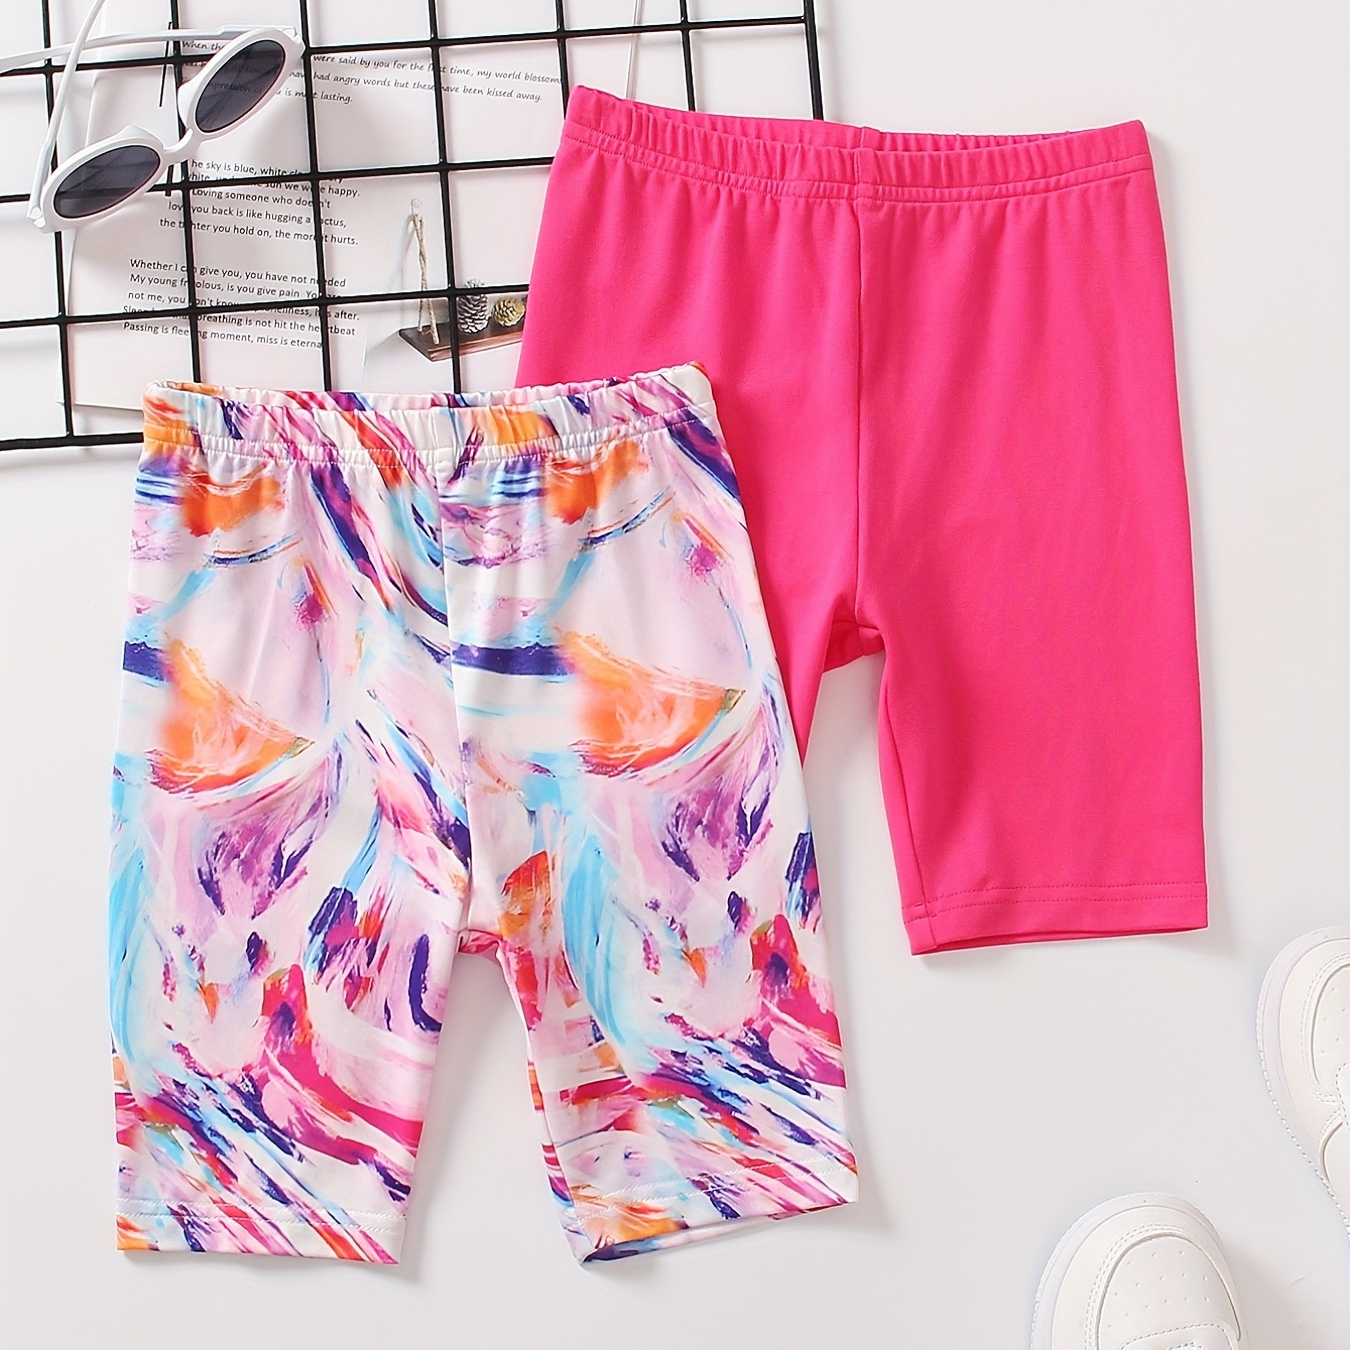 

2pcs Girls Bike Shorts Multicolored And Plain Color Shorts Set, Comfy Fit Breathable Dance Shorts For Kids